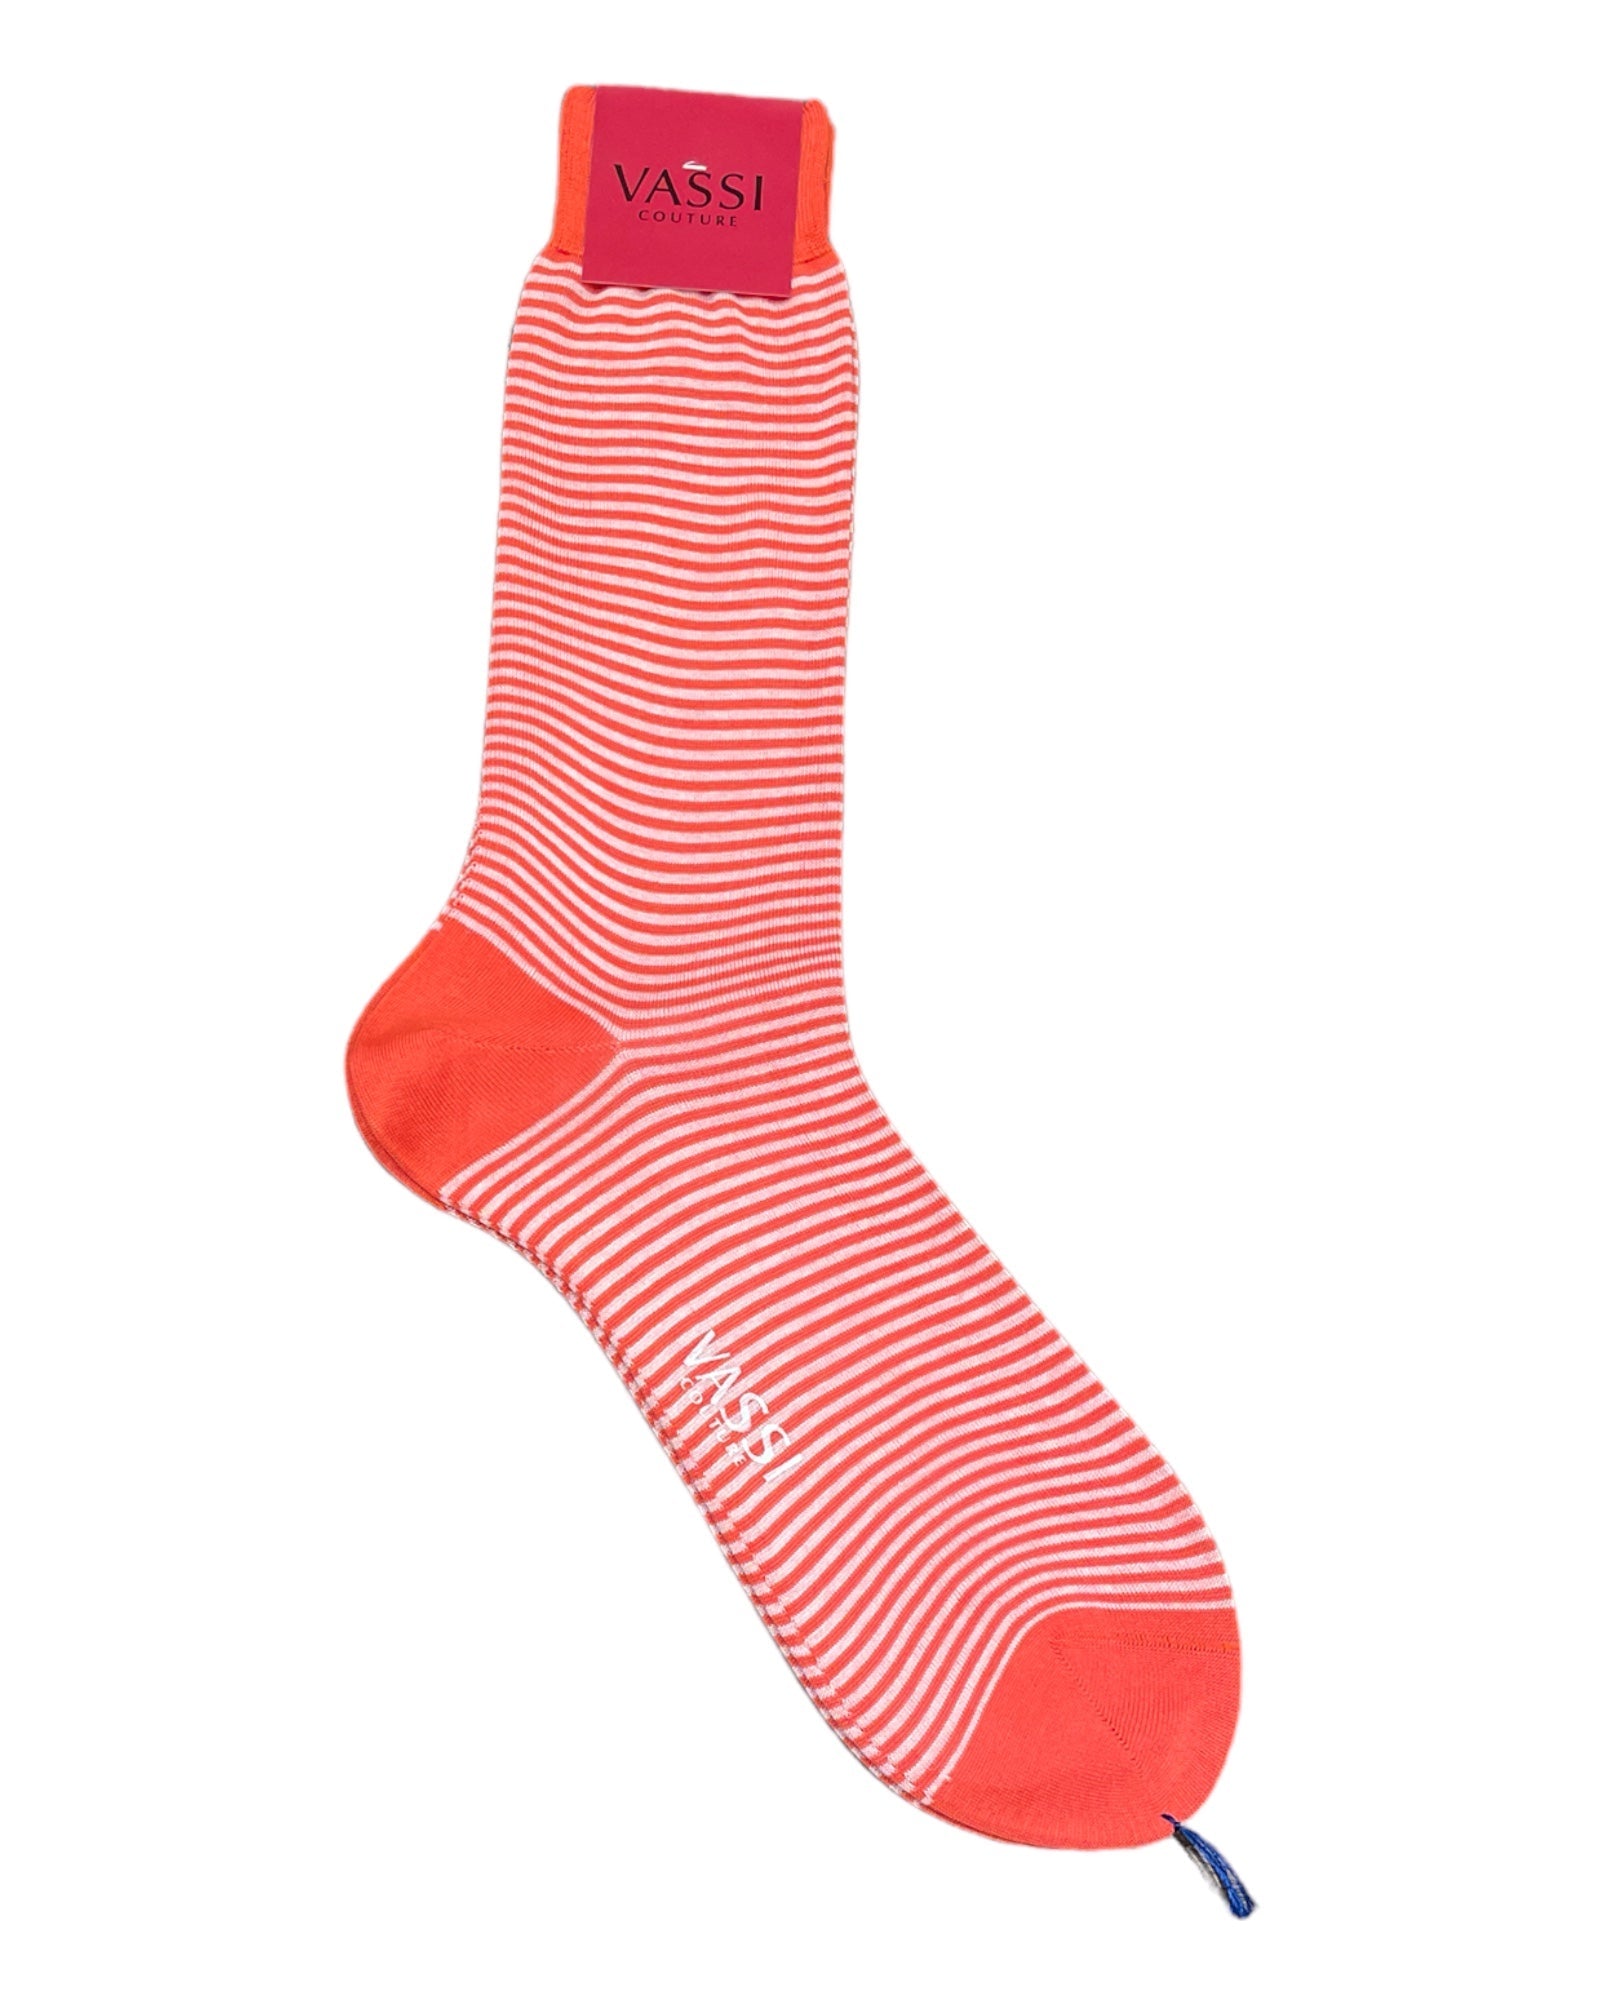 Extra-fine Horizontal Striped Cotton Socks - Tangerine Socks